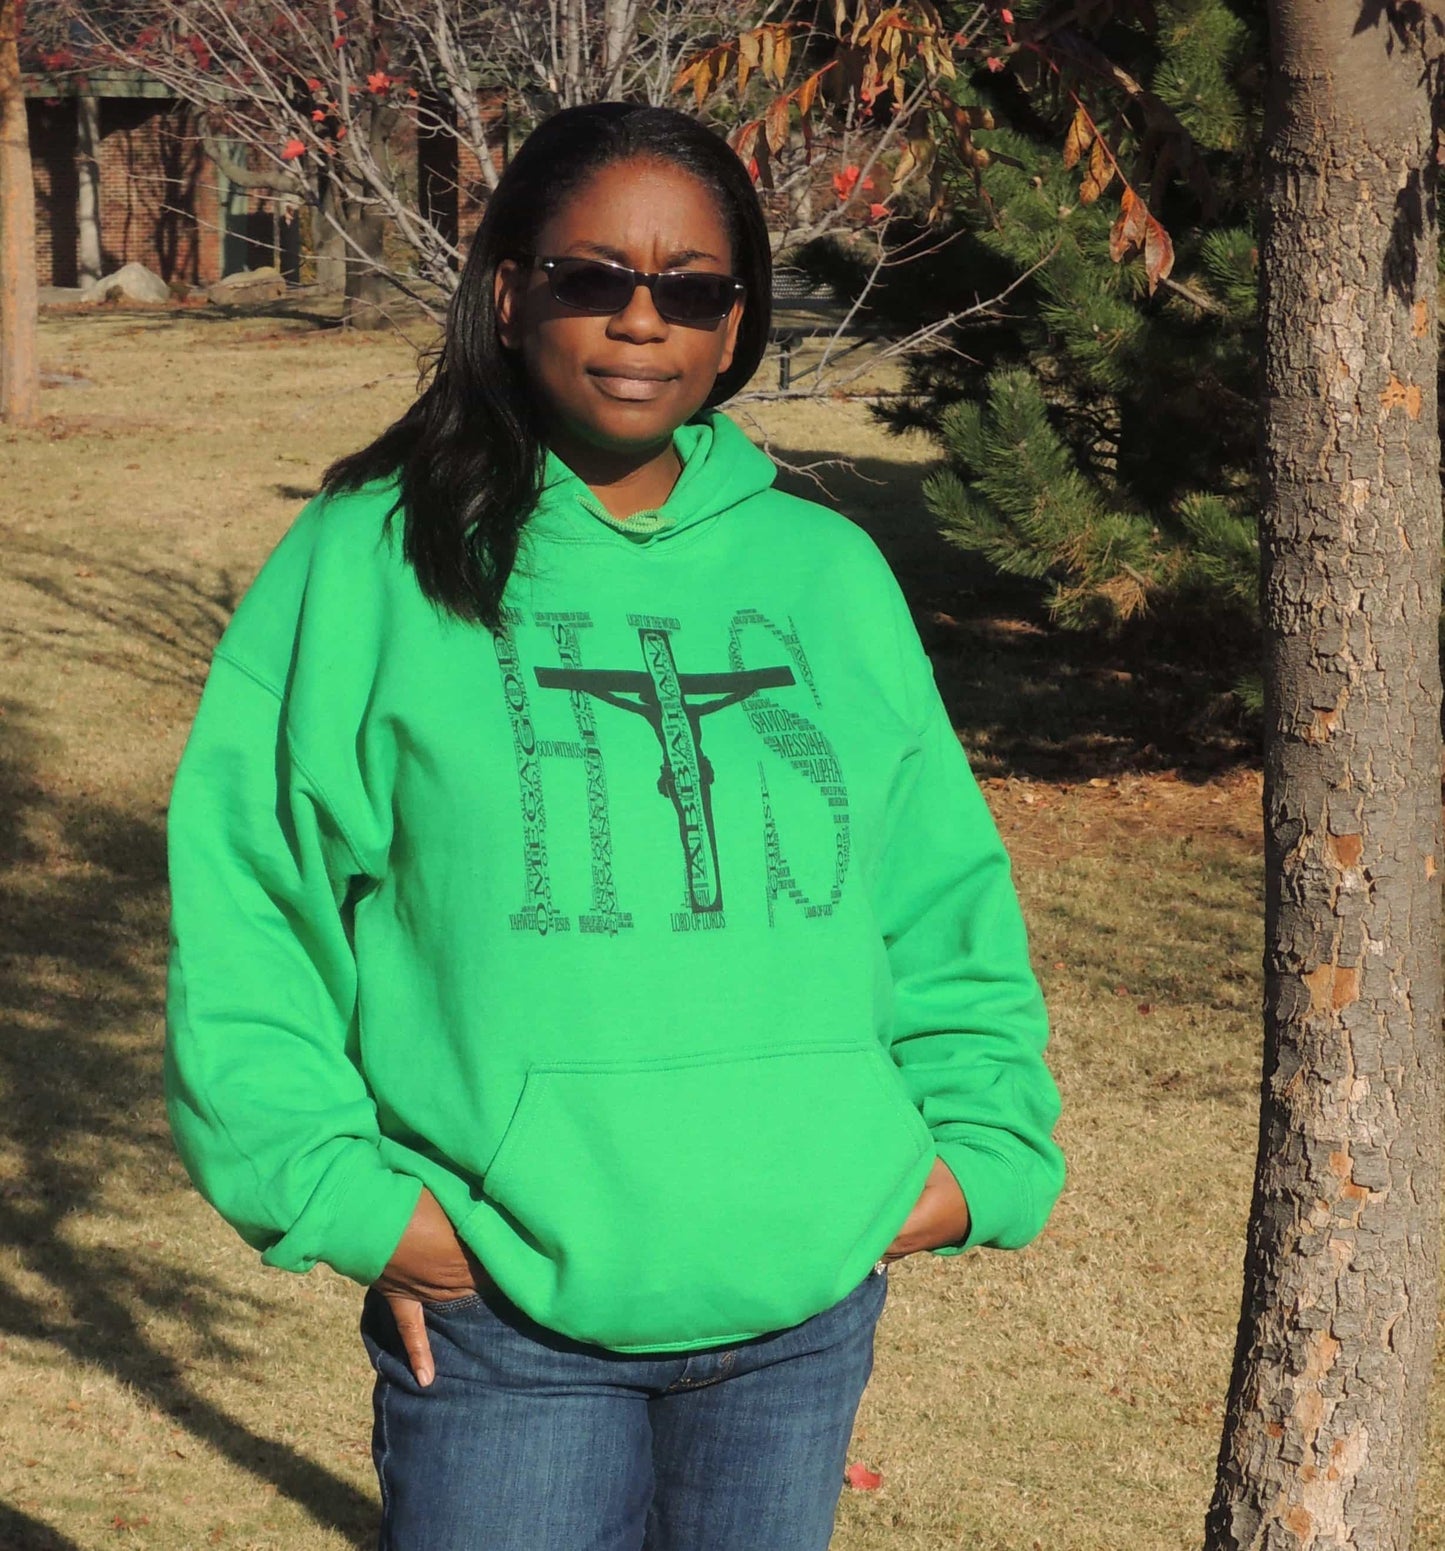 Names of God- (I AM) His -Hooded Sweatshirt Irish Green on woman in shades outdoors